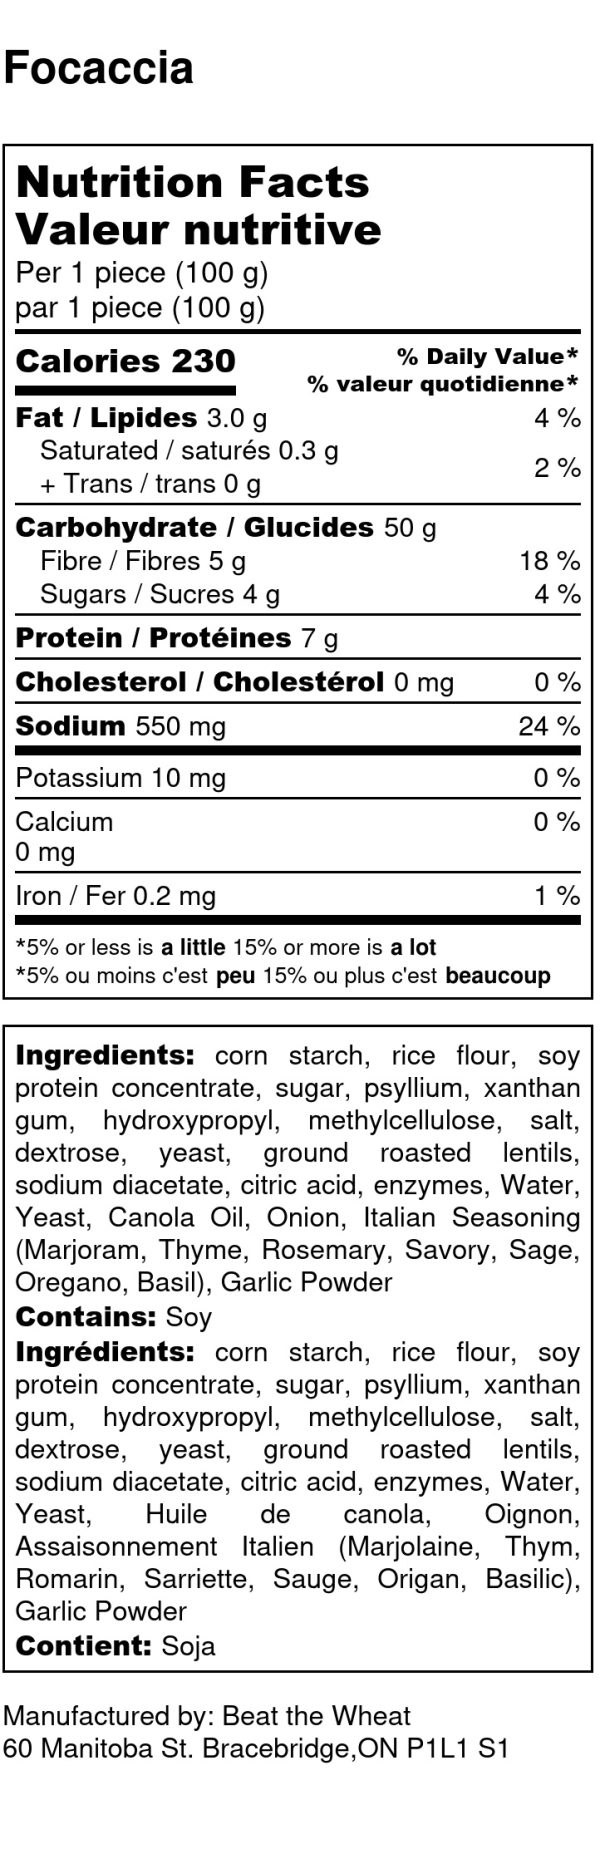 Focaccia - Nutrition Label